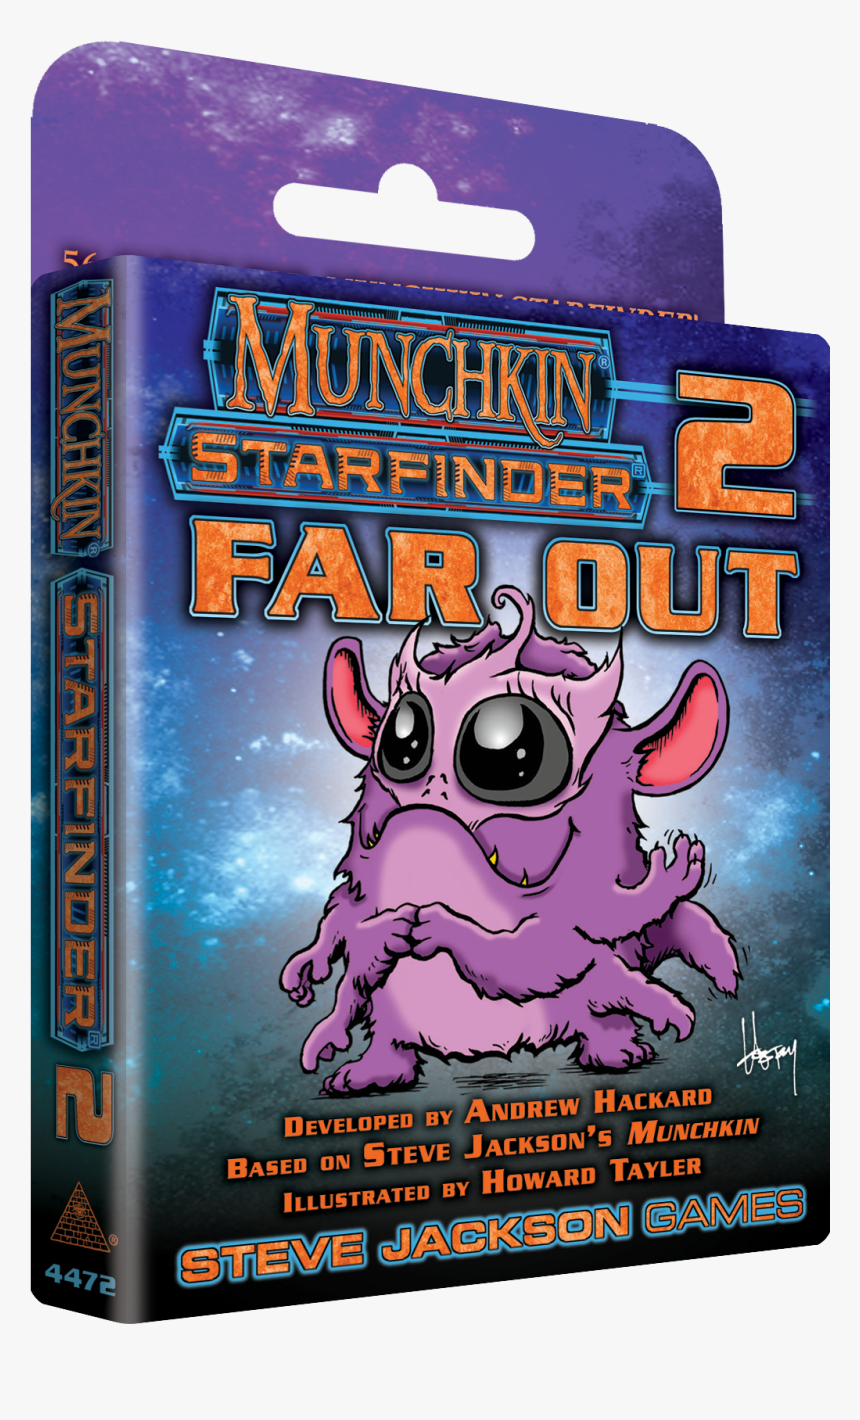 Sjg4471 Steve Jackson Games Munchkin Starfinder, HD Png Download, Free Download